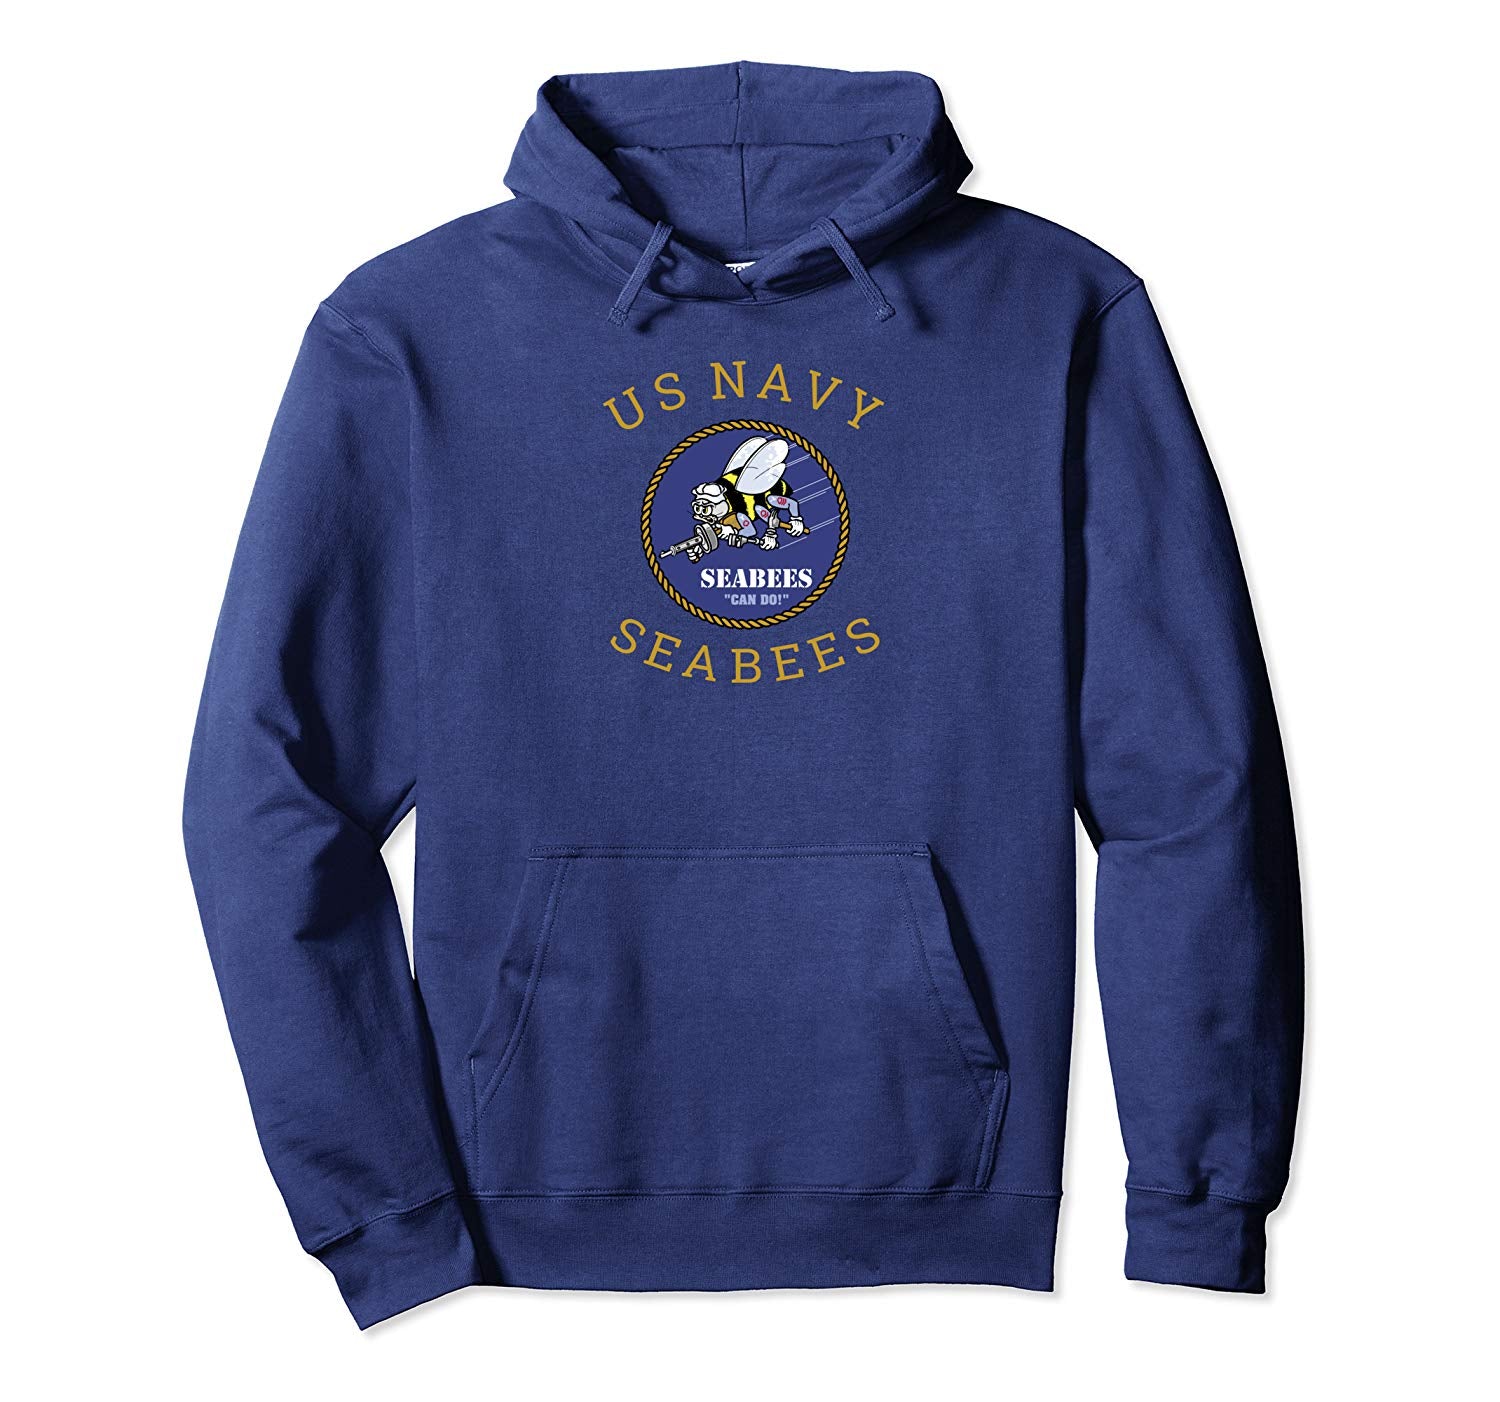 seabee sweatshirt